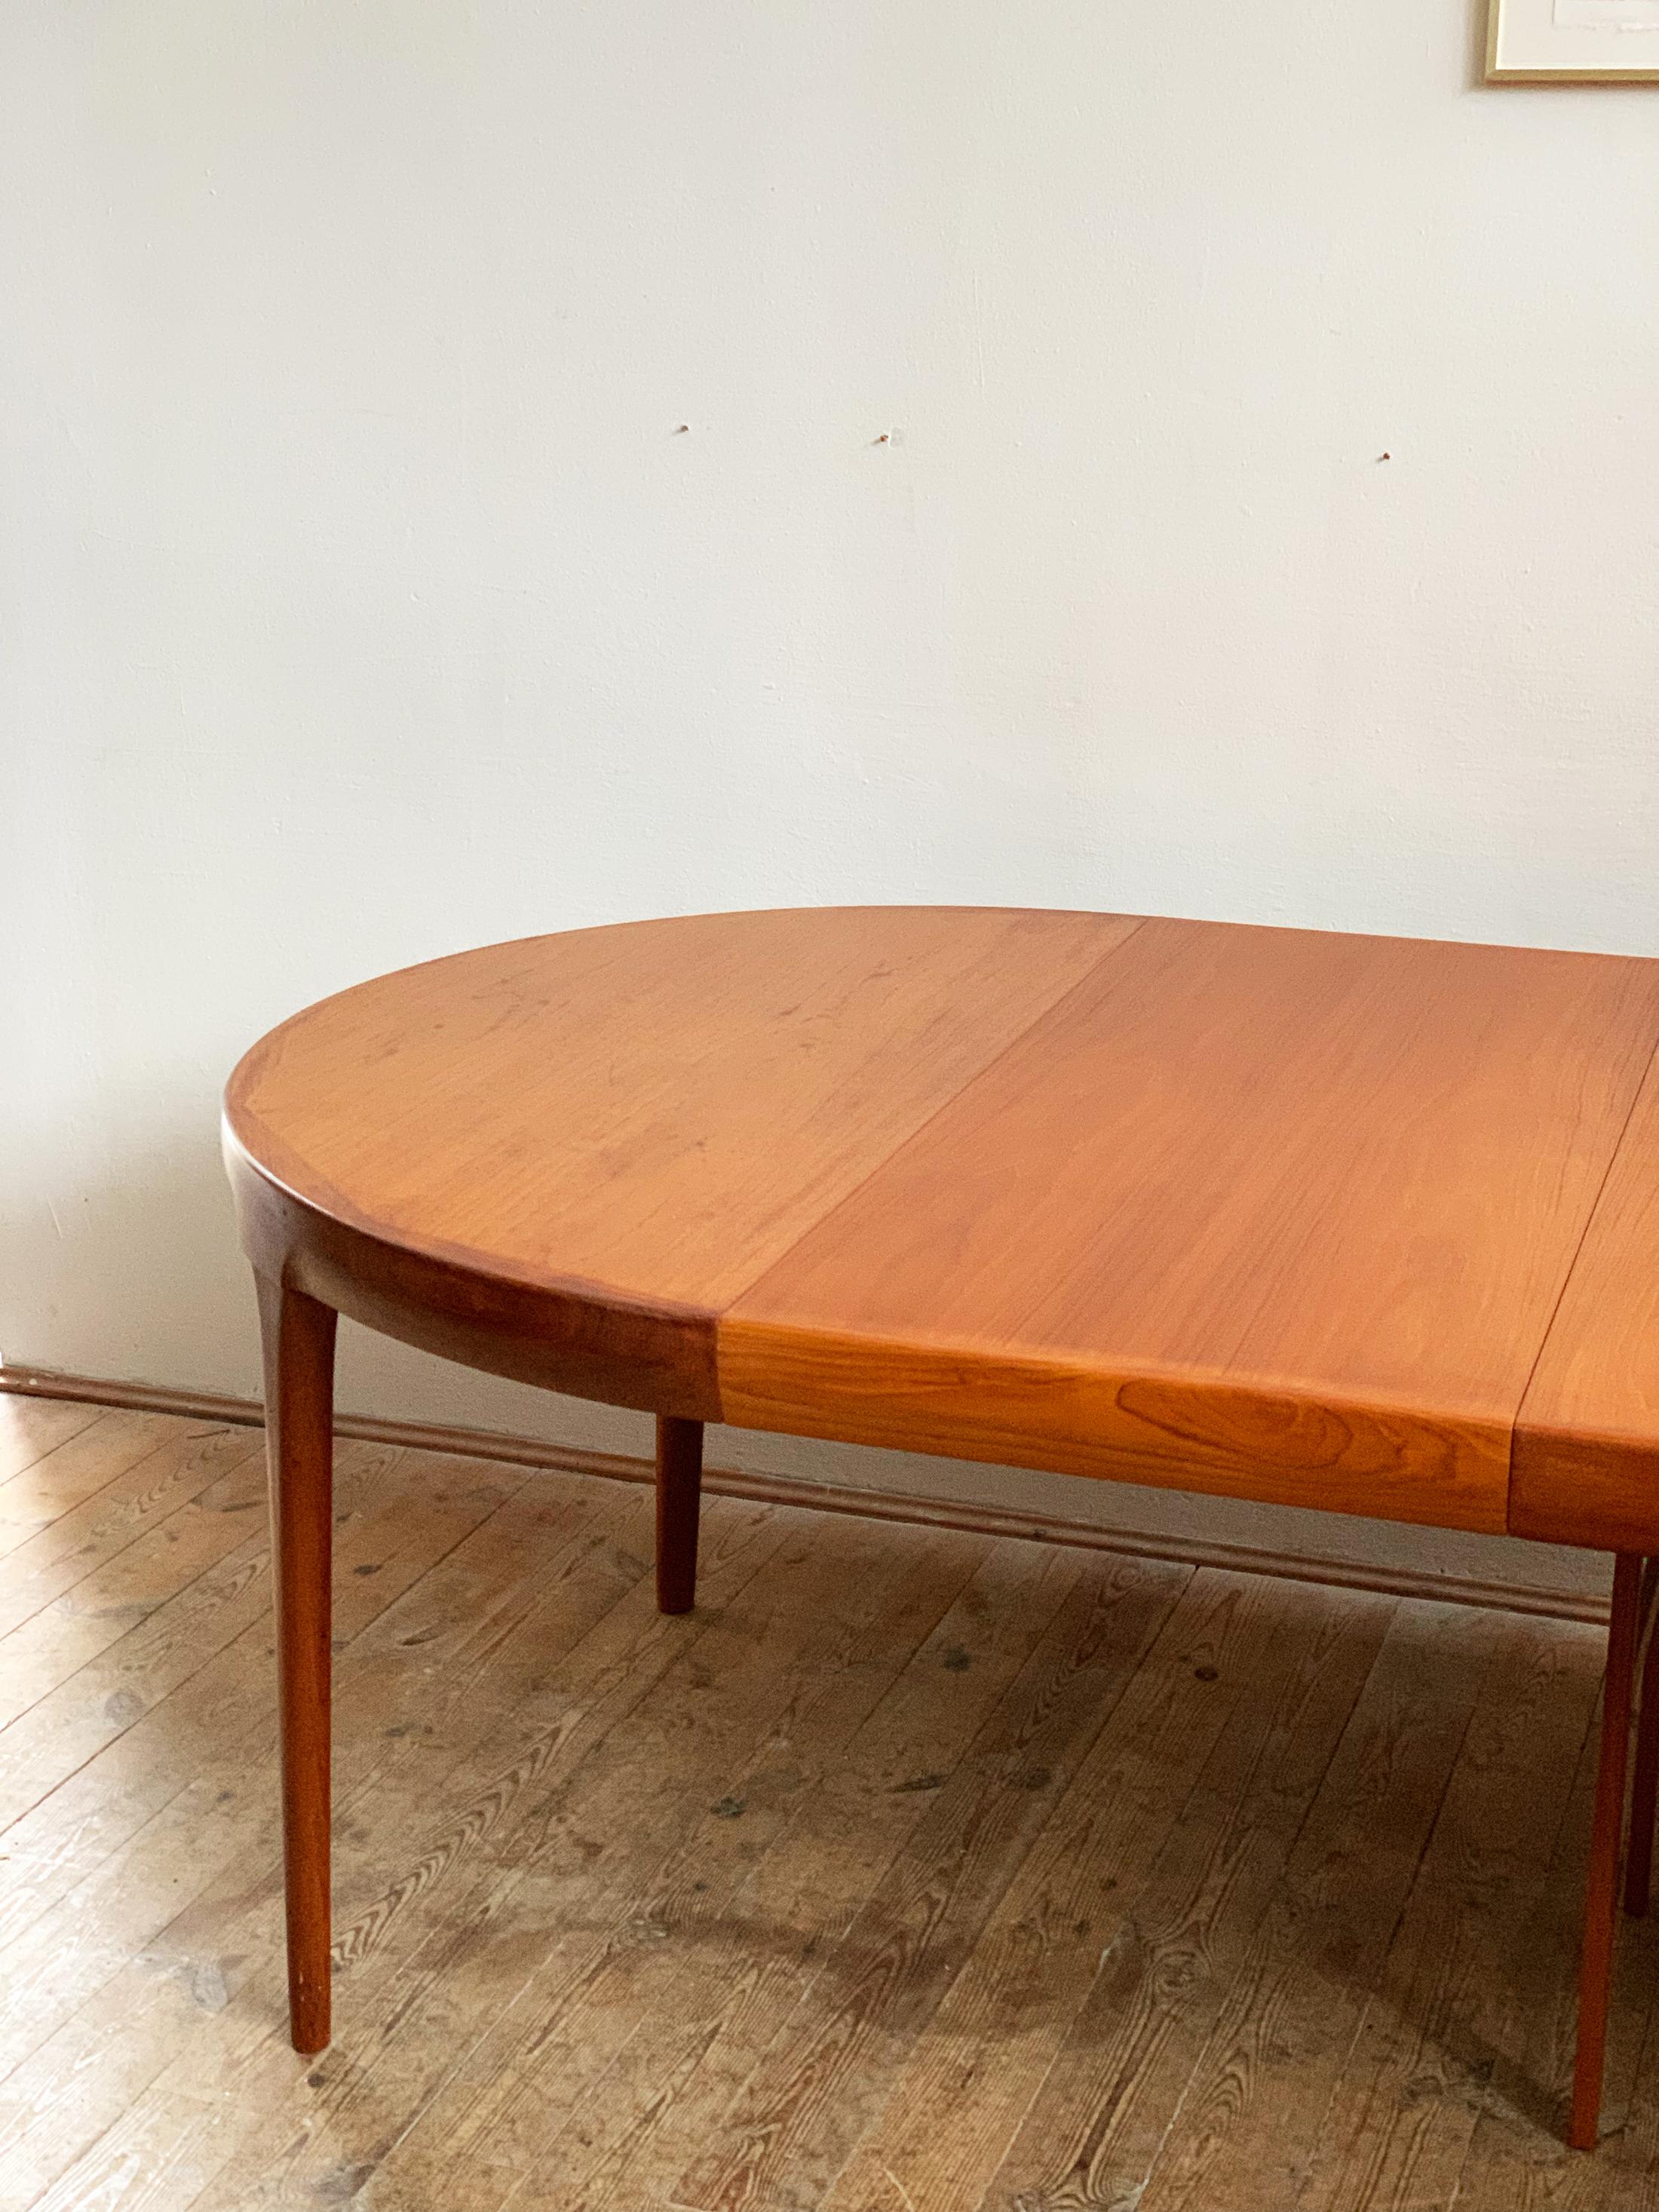 Danish Mid-Century Modern Extendable Teak Dining Table by Ib Kofod-Larsen, 1960s For Sale 10